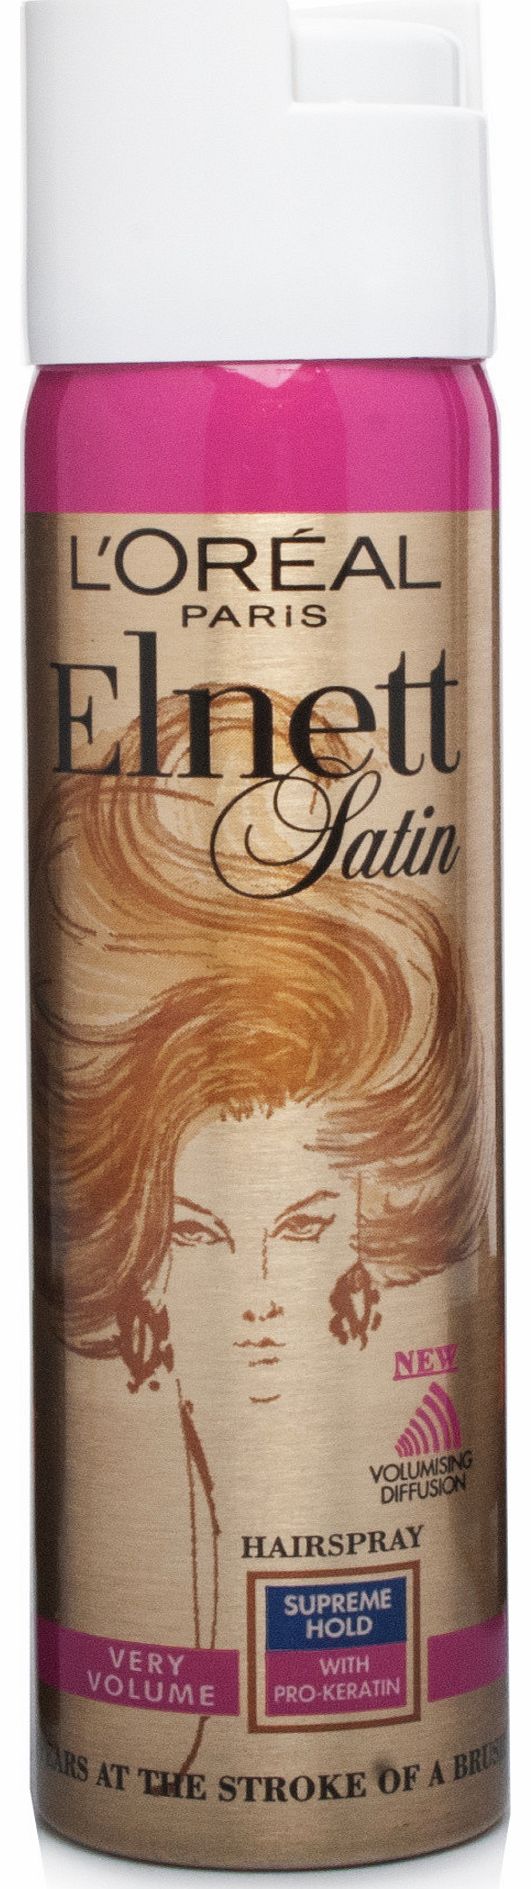 L'Oreal Elnett Hairspray Very Volume